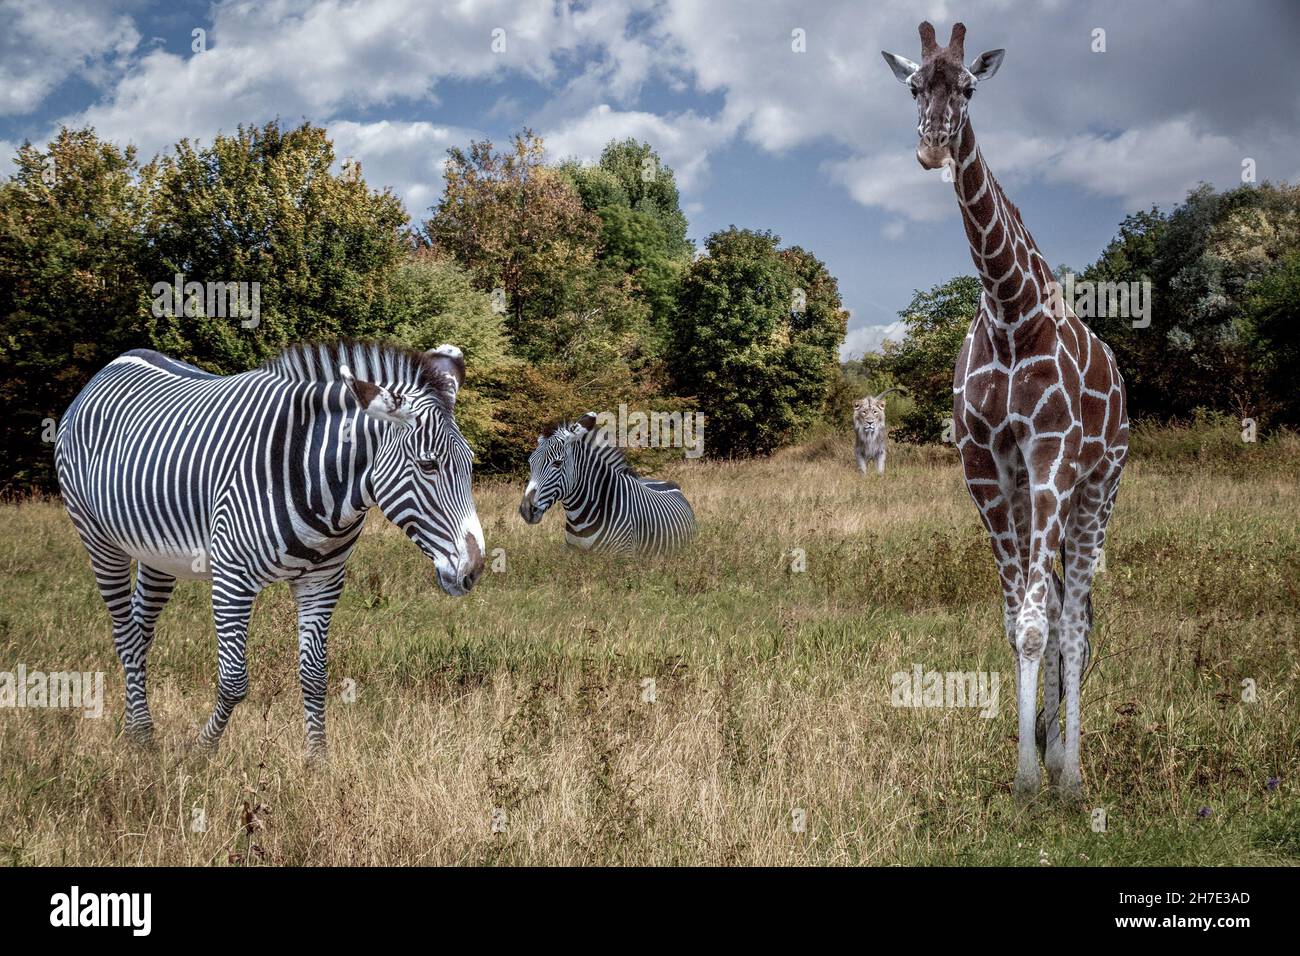 a lion, zebra and giraffe in tall grass Stock Photo